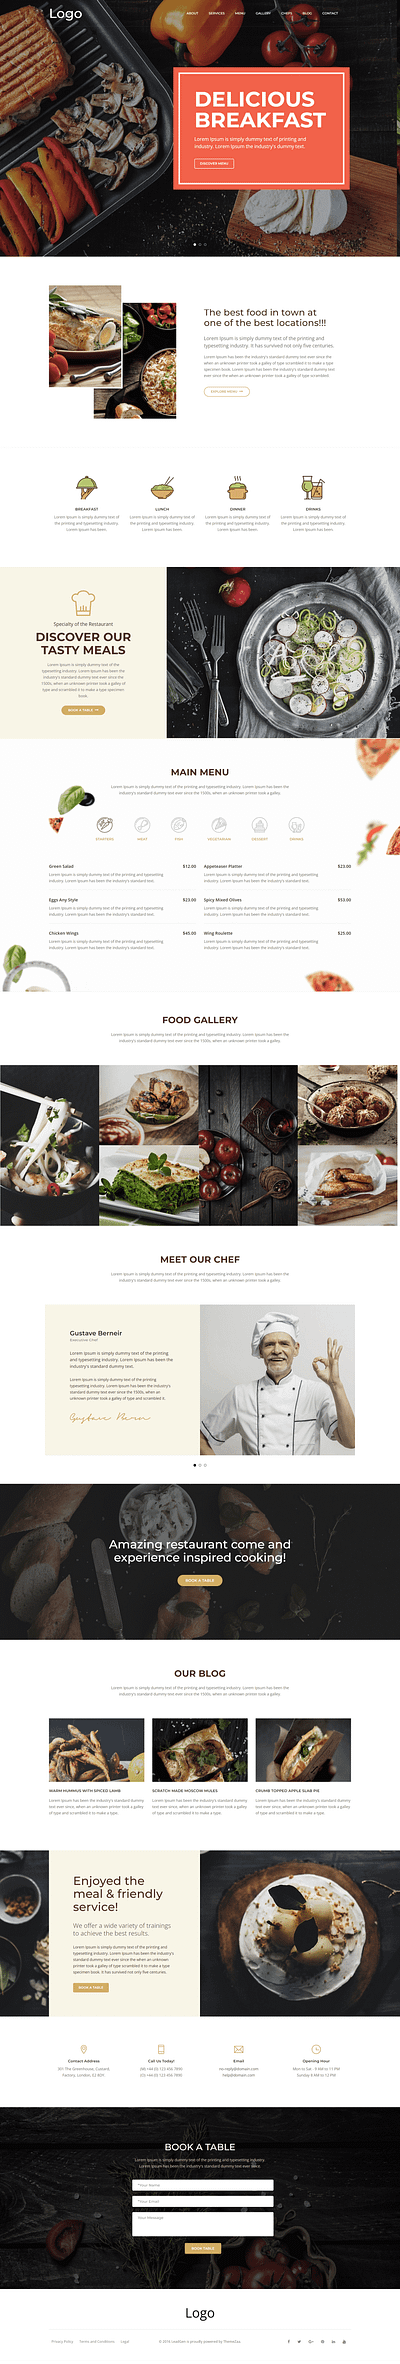 Restaurant web design web development